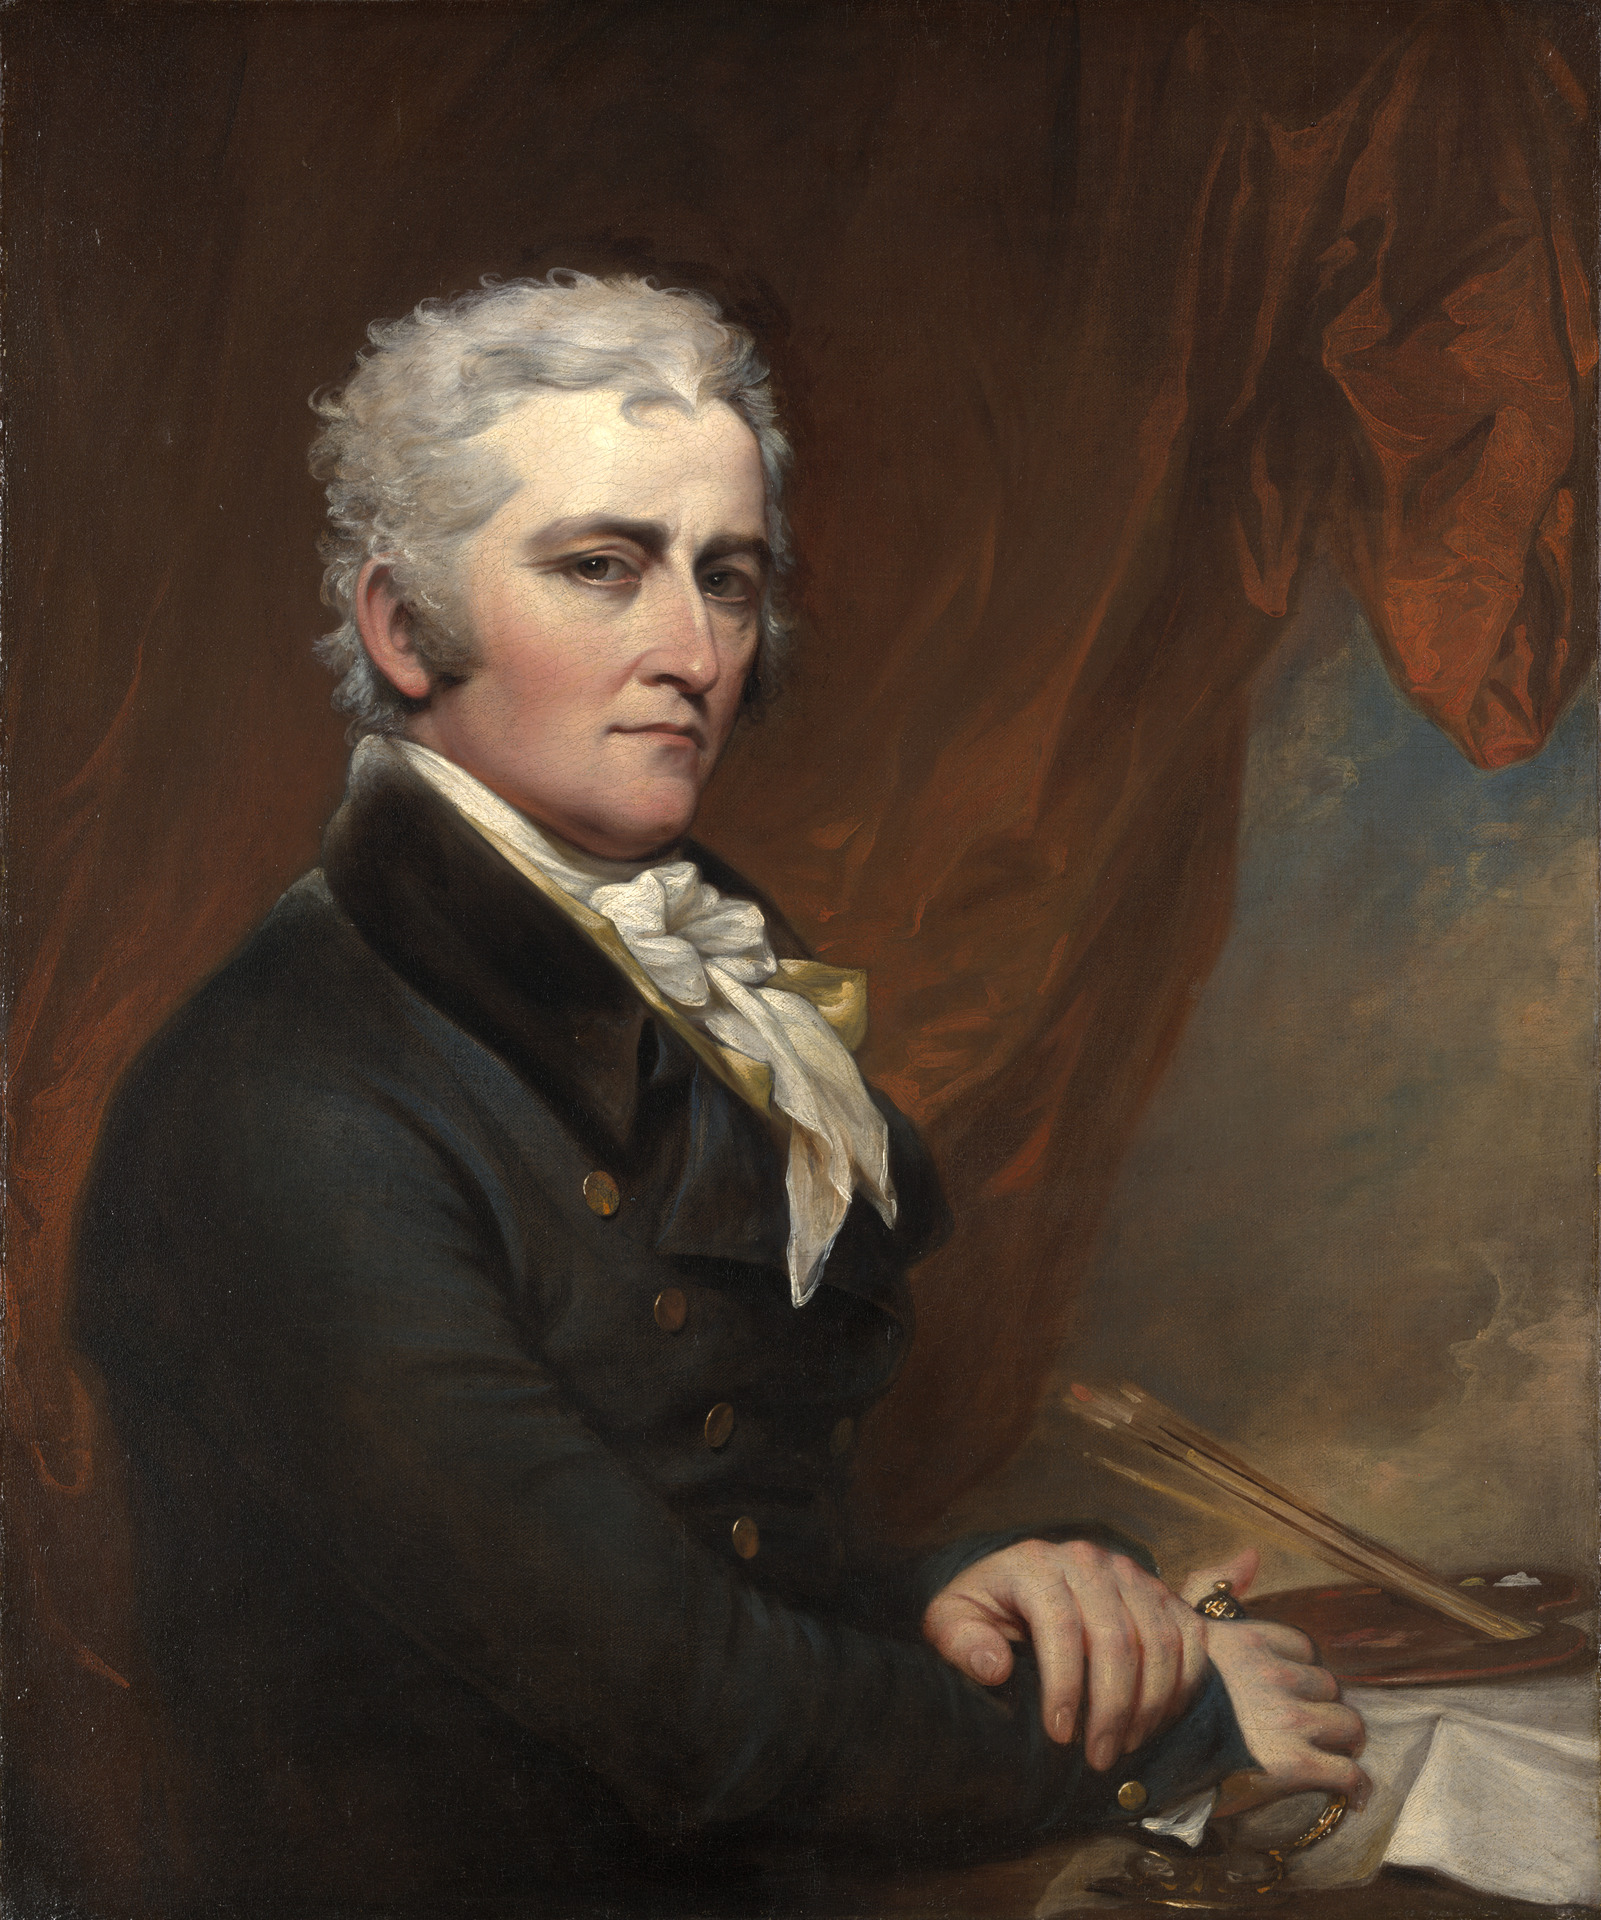 John Trumbull - June 6, 1756 - November 10, 1843